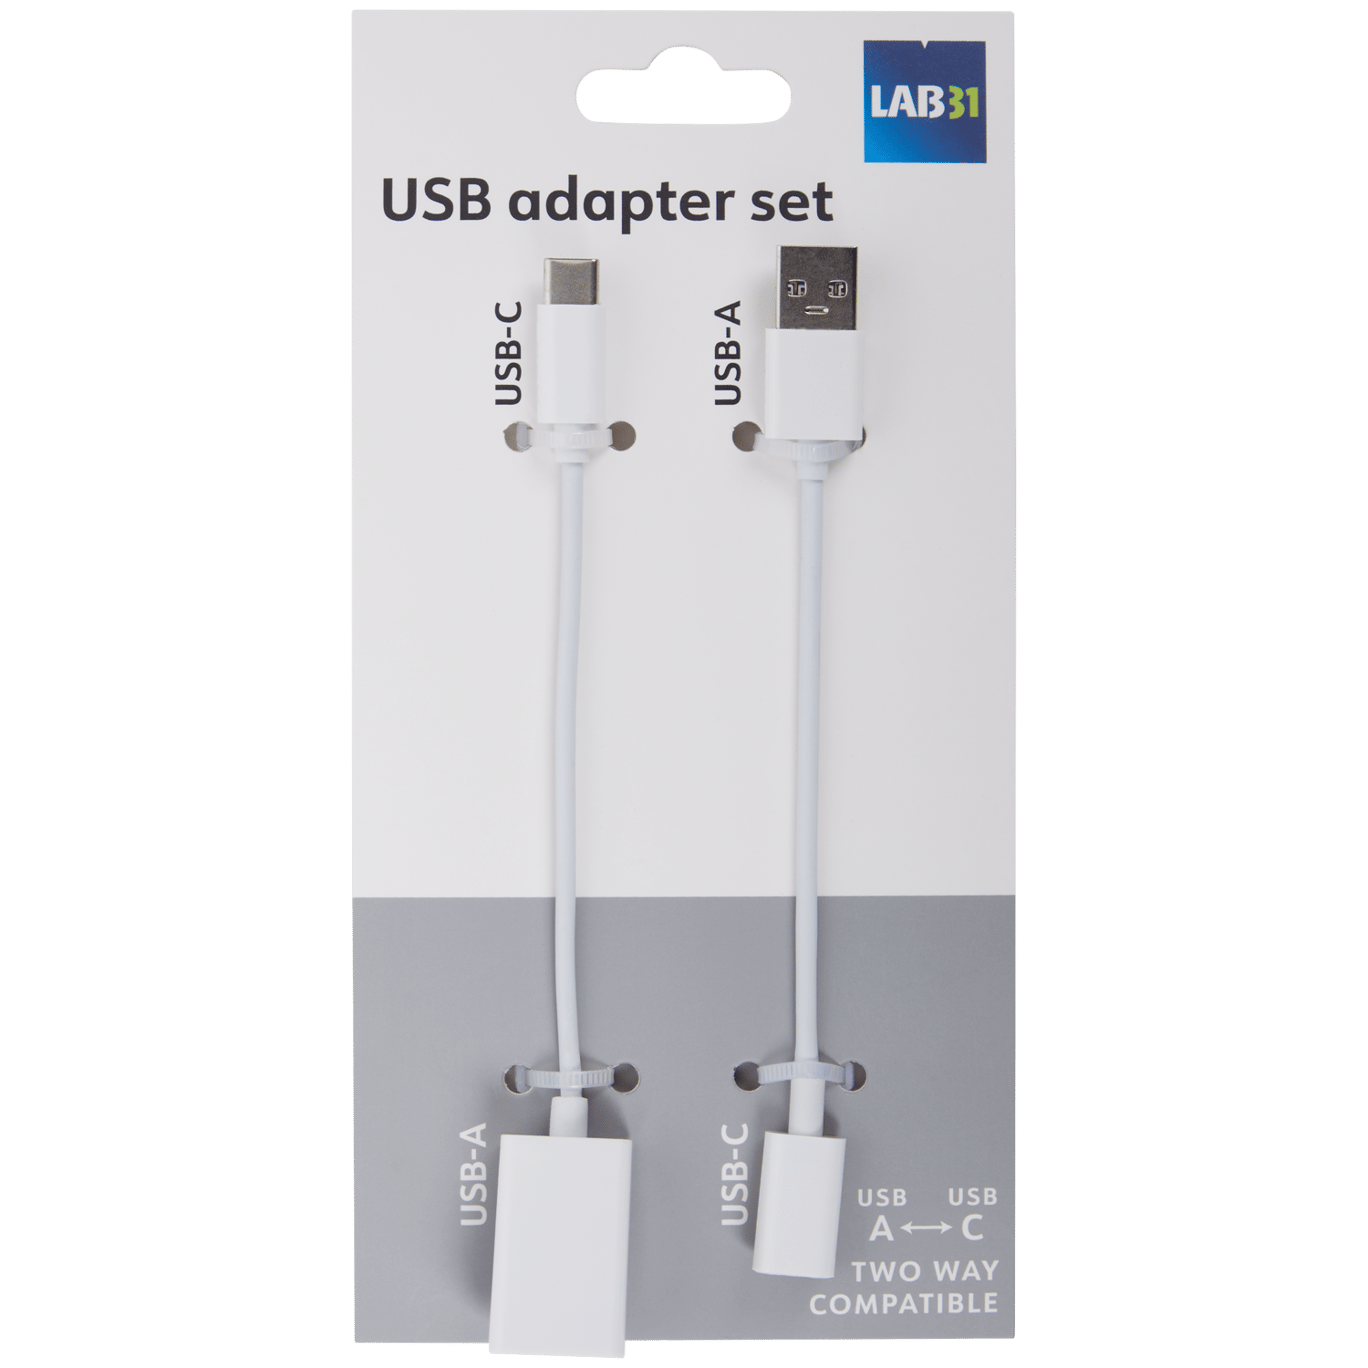 Lab31 USB-C-adapterset